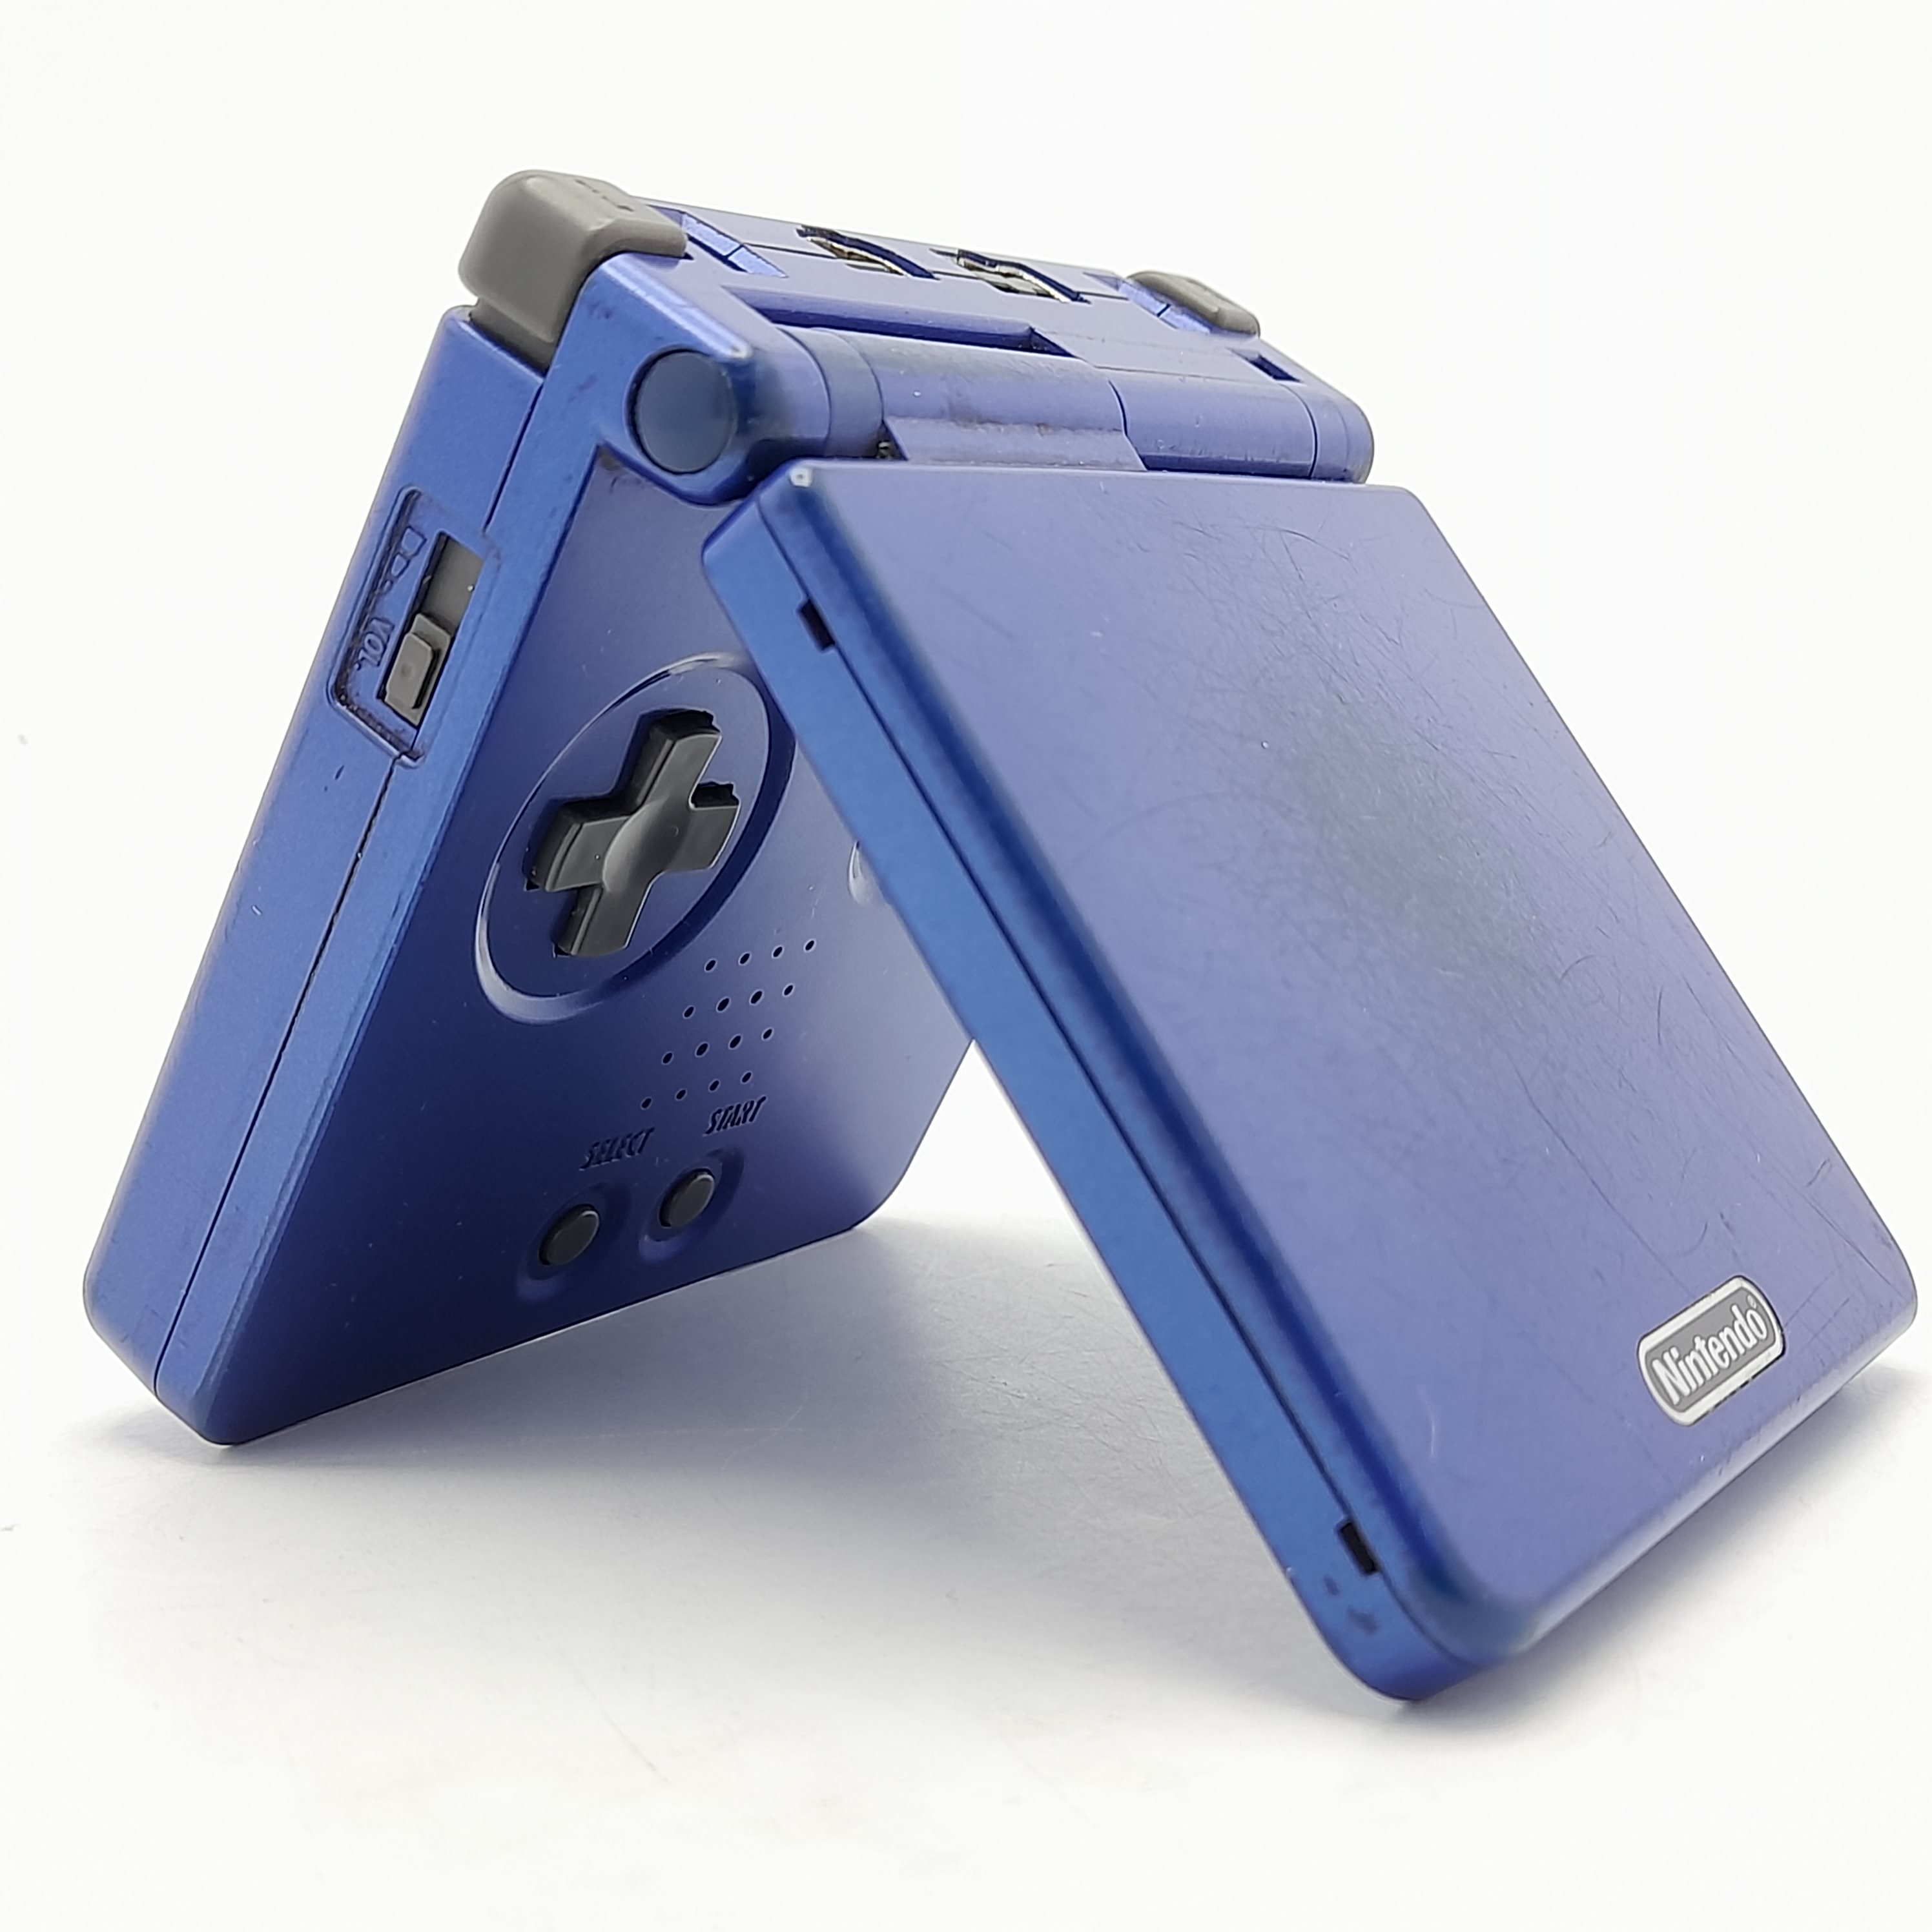 Foto van Game Boy Advance SP Kobalt Blauw - Mooi